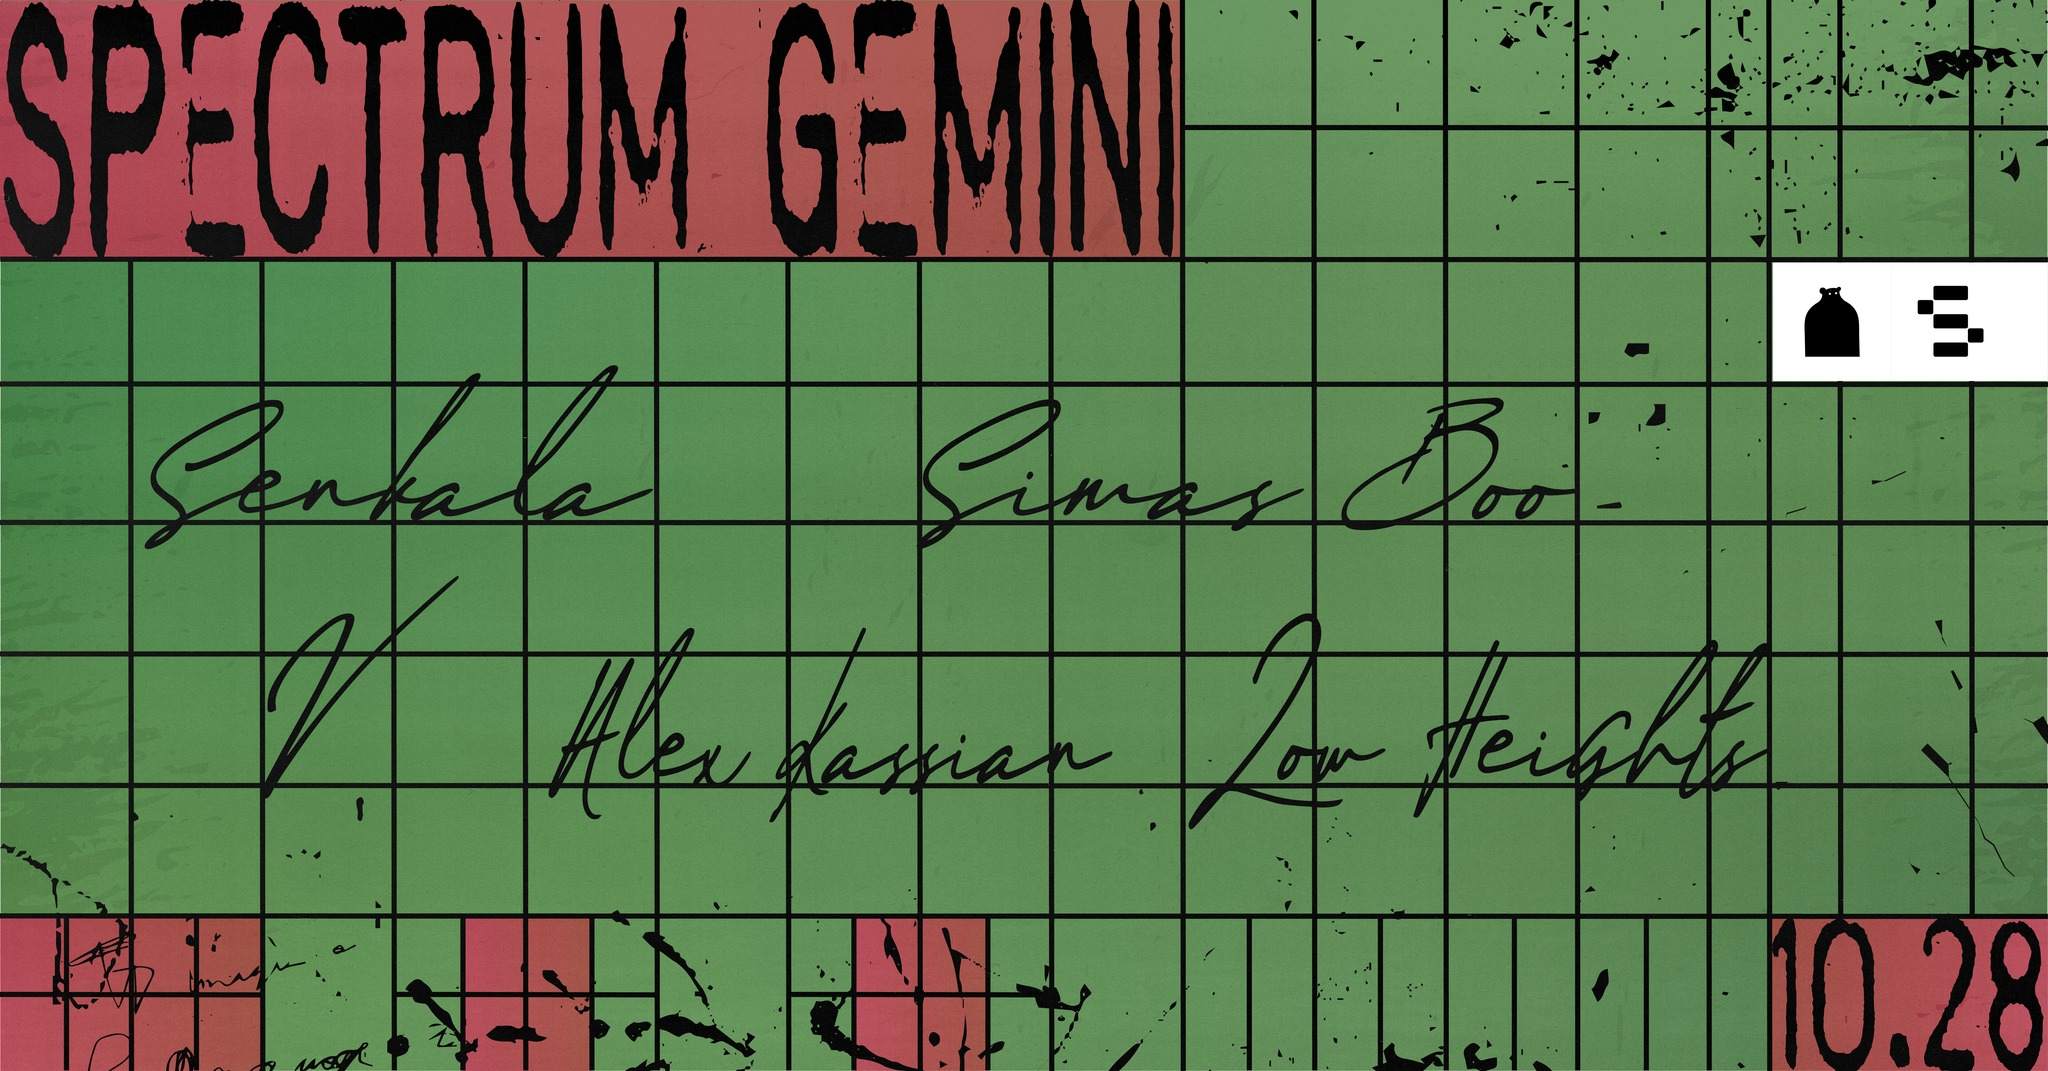 Spectrum Gemini: Alex Kassian, Low Heights, Senkala, Simas Boo, V - フライヤー表